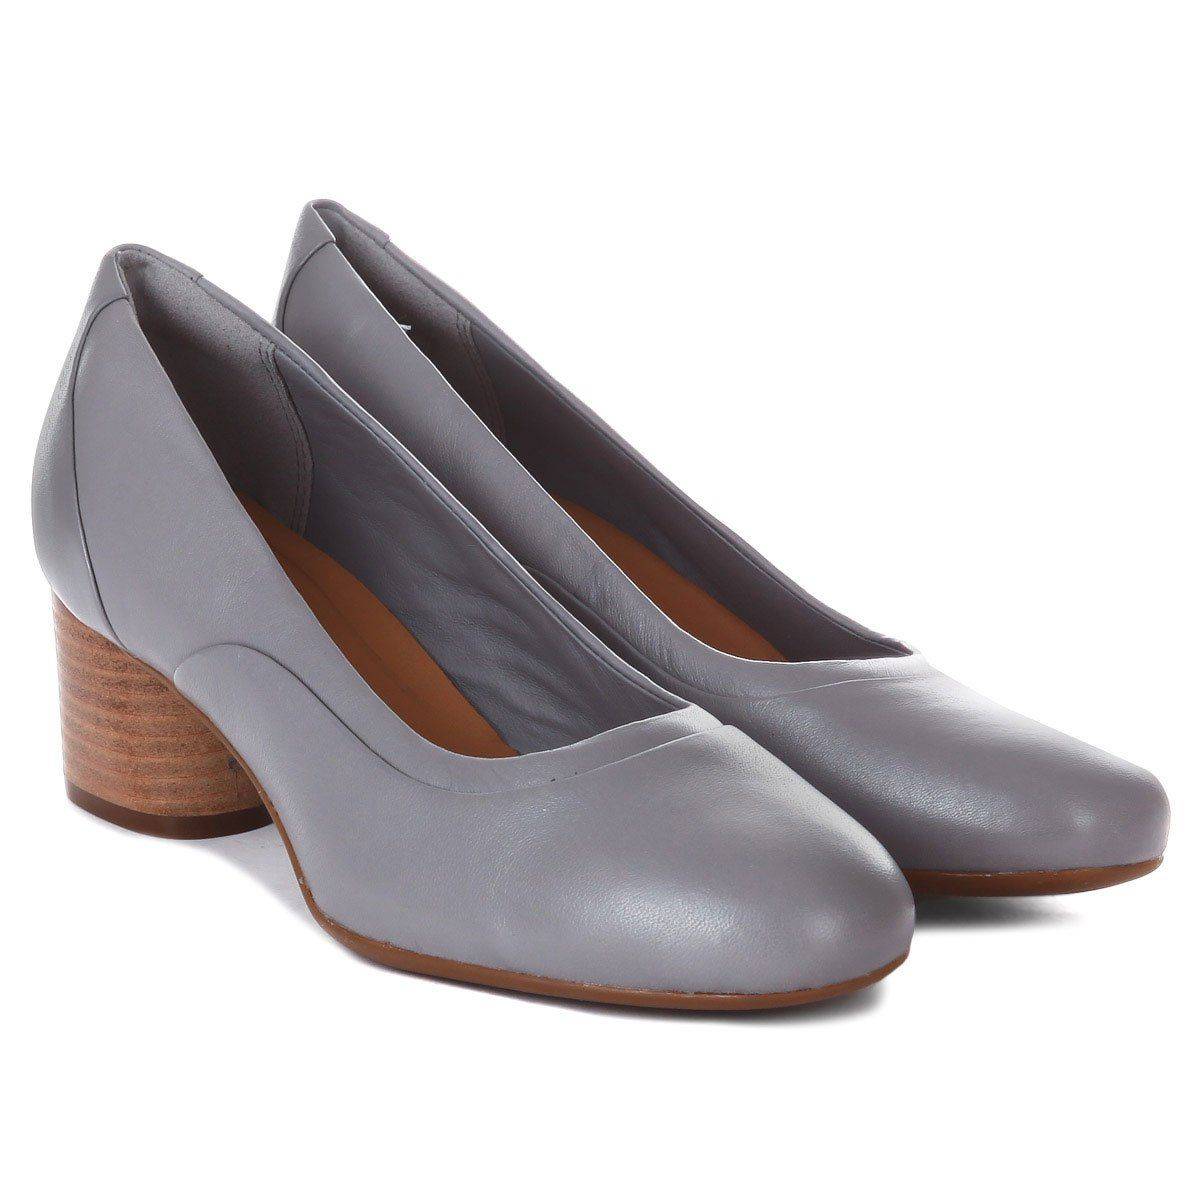 Женские туфли-лодочки Clarks(Un Cosmo Step 26139688), серые